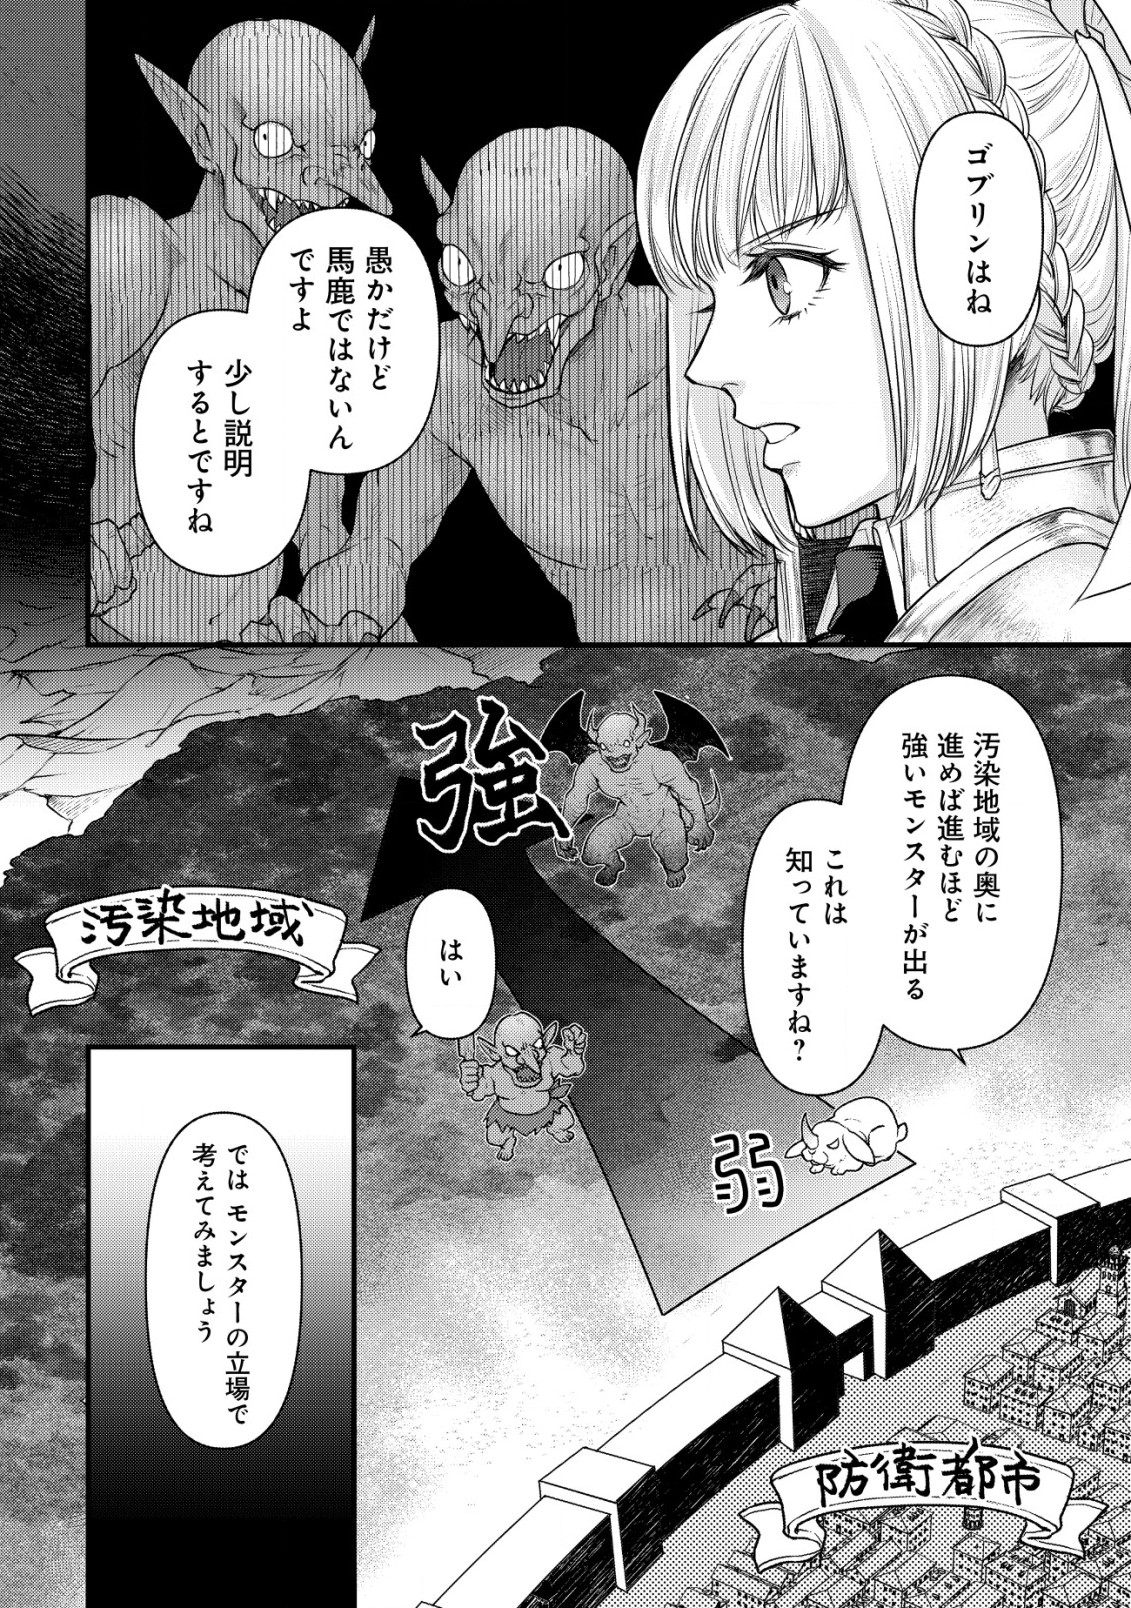 Kikori no Isekai Tan - Chapter 3 - Page 7